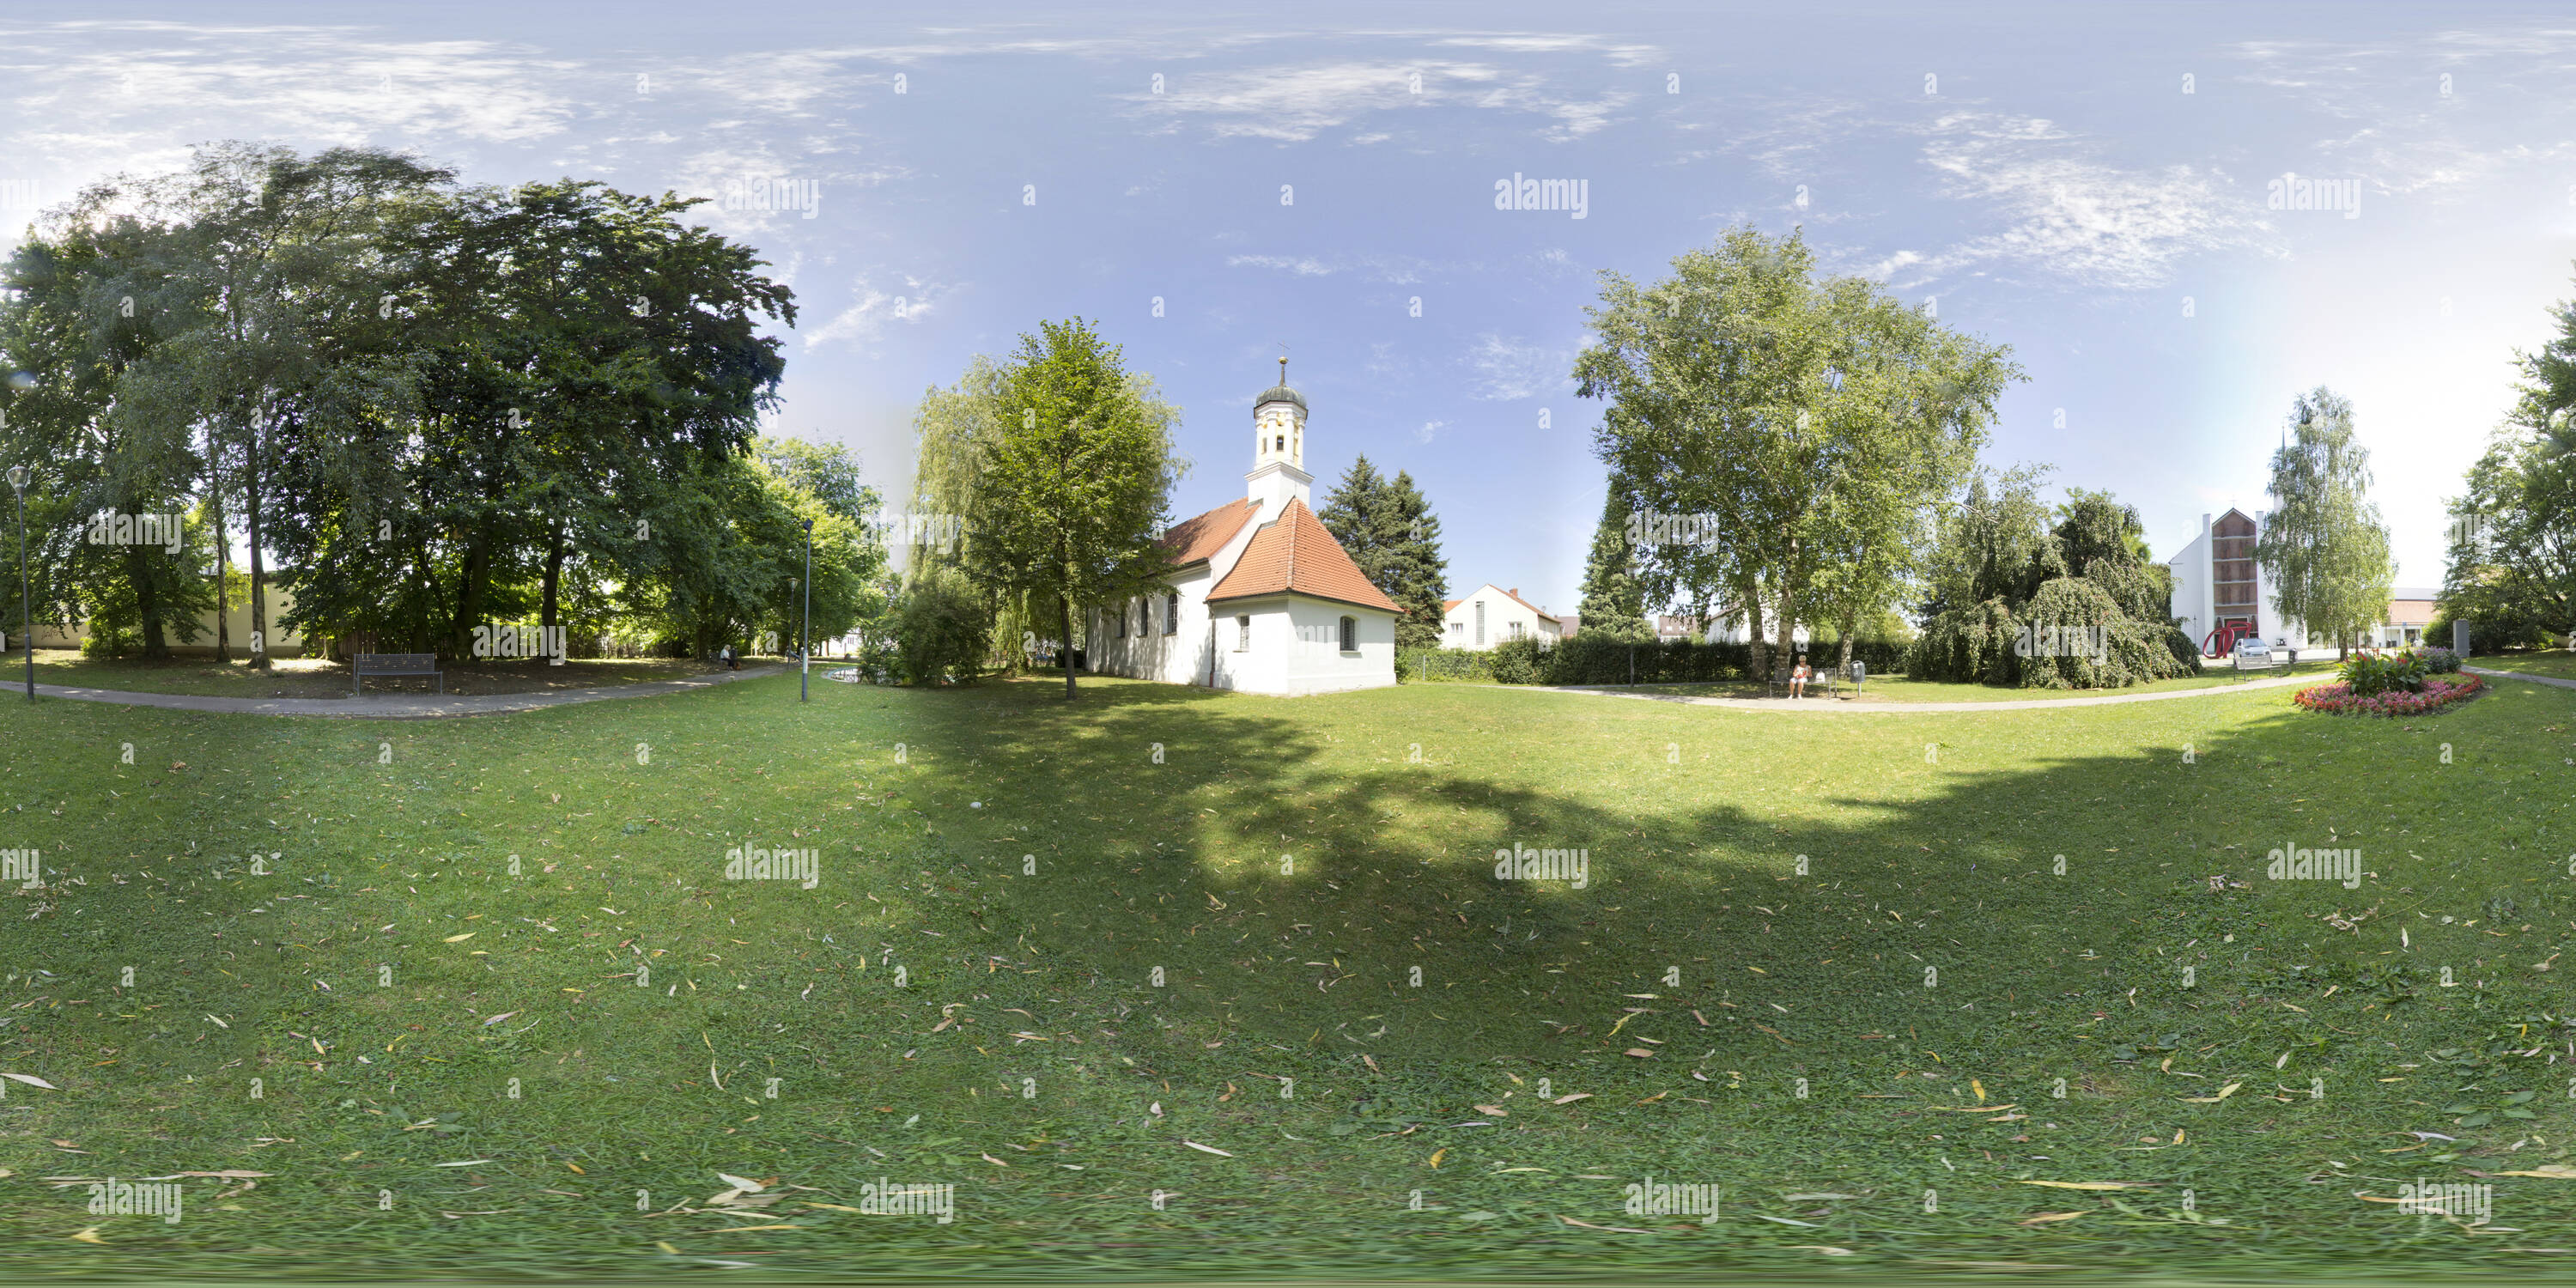 Vista panorámica en 360 grados de Neusäß Ägidiuskapelle